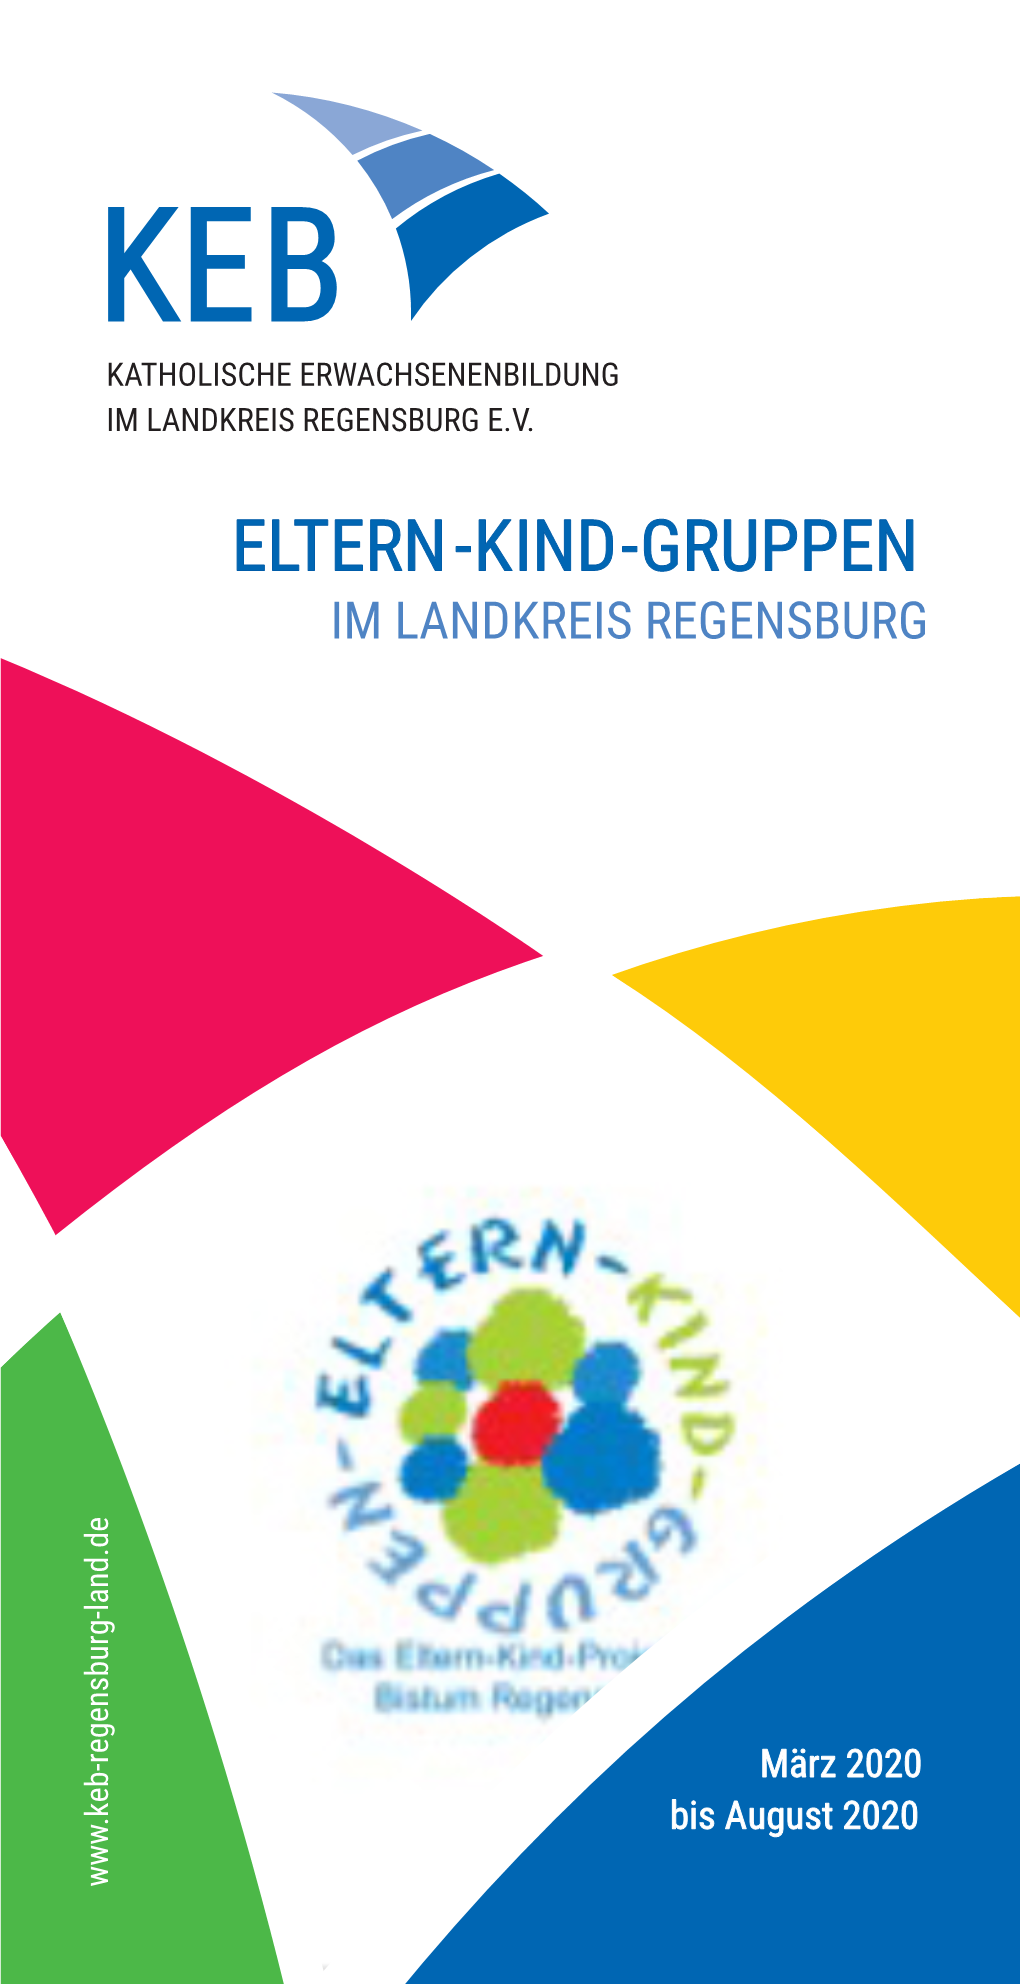 ELTERN-KIND-GRUPPEN IM LANDKREIS REGENSBURG Land.De - Regensburg - März 2020